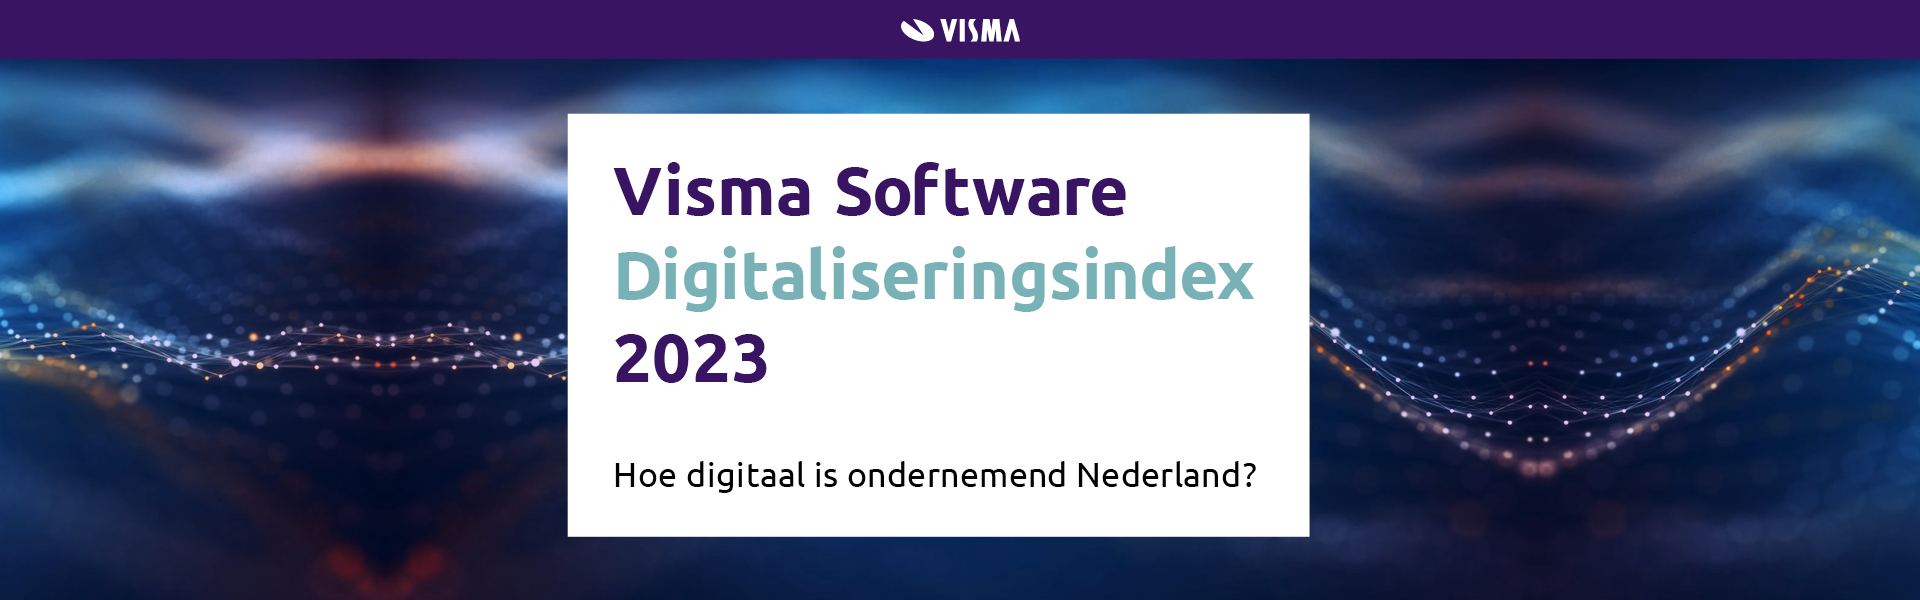 Visma Digitaliseringsindex 2023 - Hoe digitaal is ondernemend Nederland?